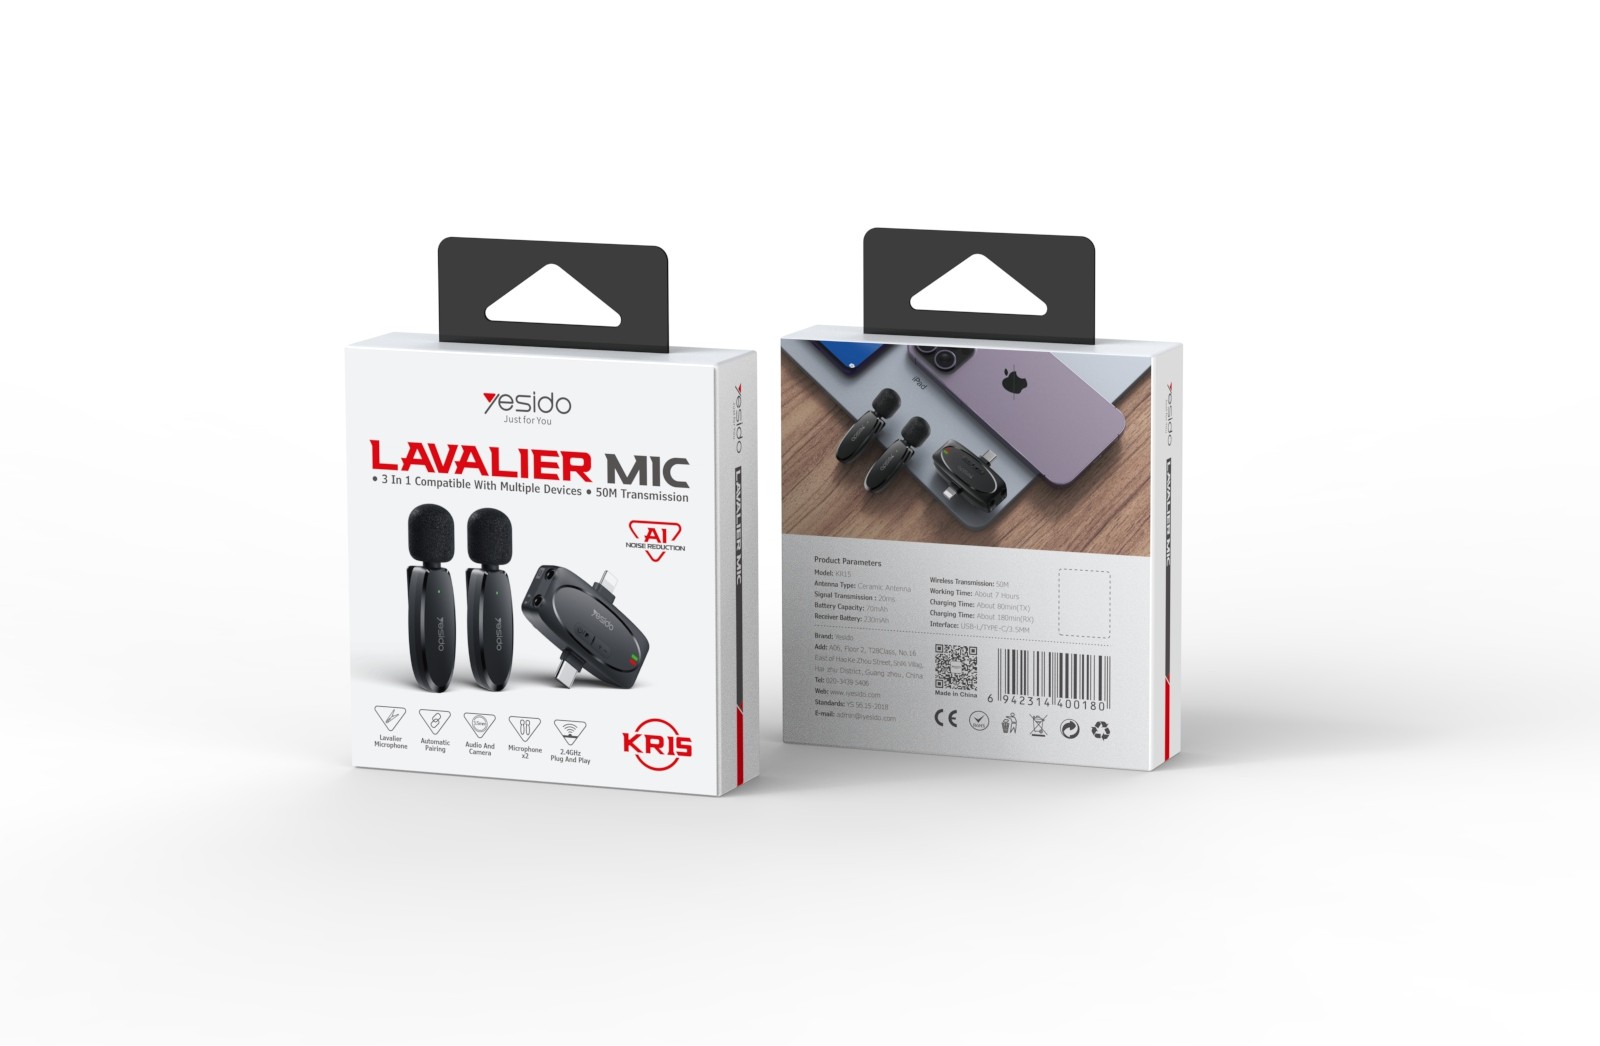 Yesido KR15 Wireless MEMS Microphone Packaging